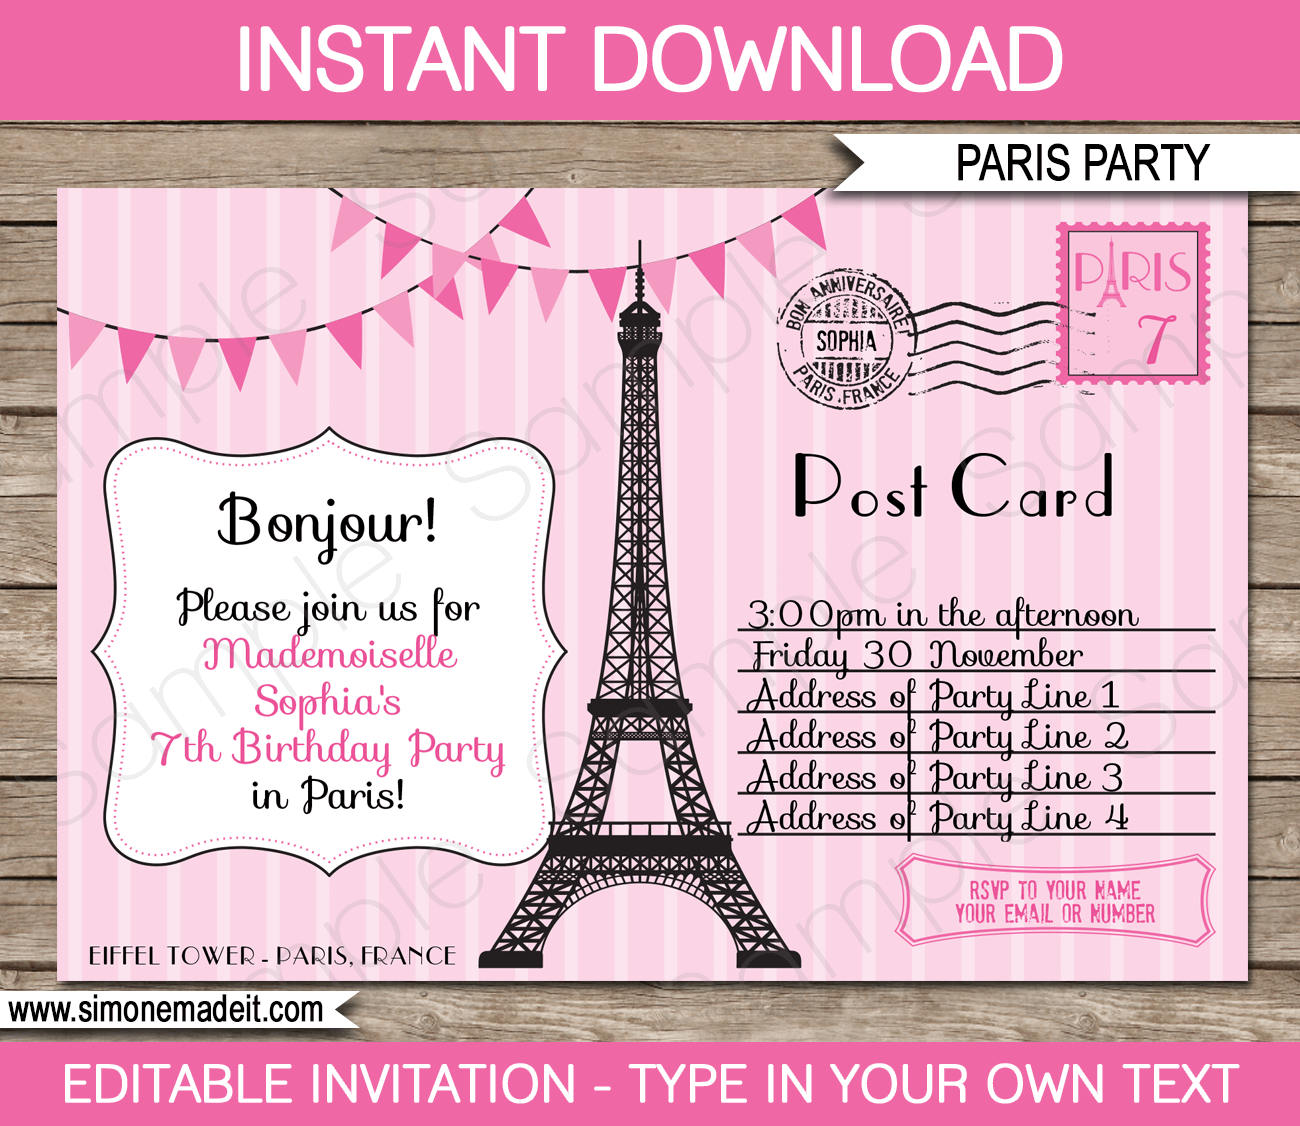 Paris Party Invitations | Postcard to Paris | Birthday Party | Editable DIY Theme Template | INSTANT DOWNLOAD $7.50 via SIMONEmadeit.com